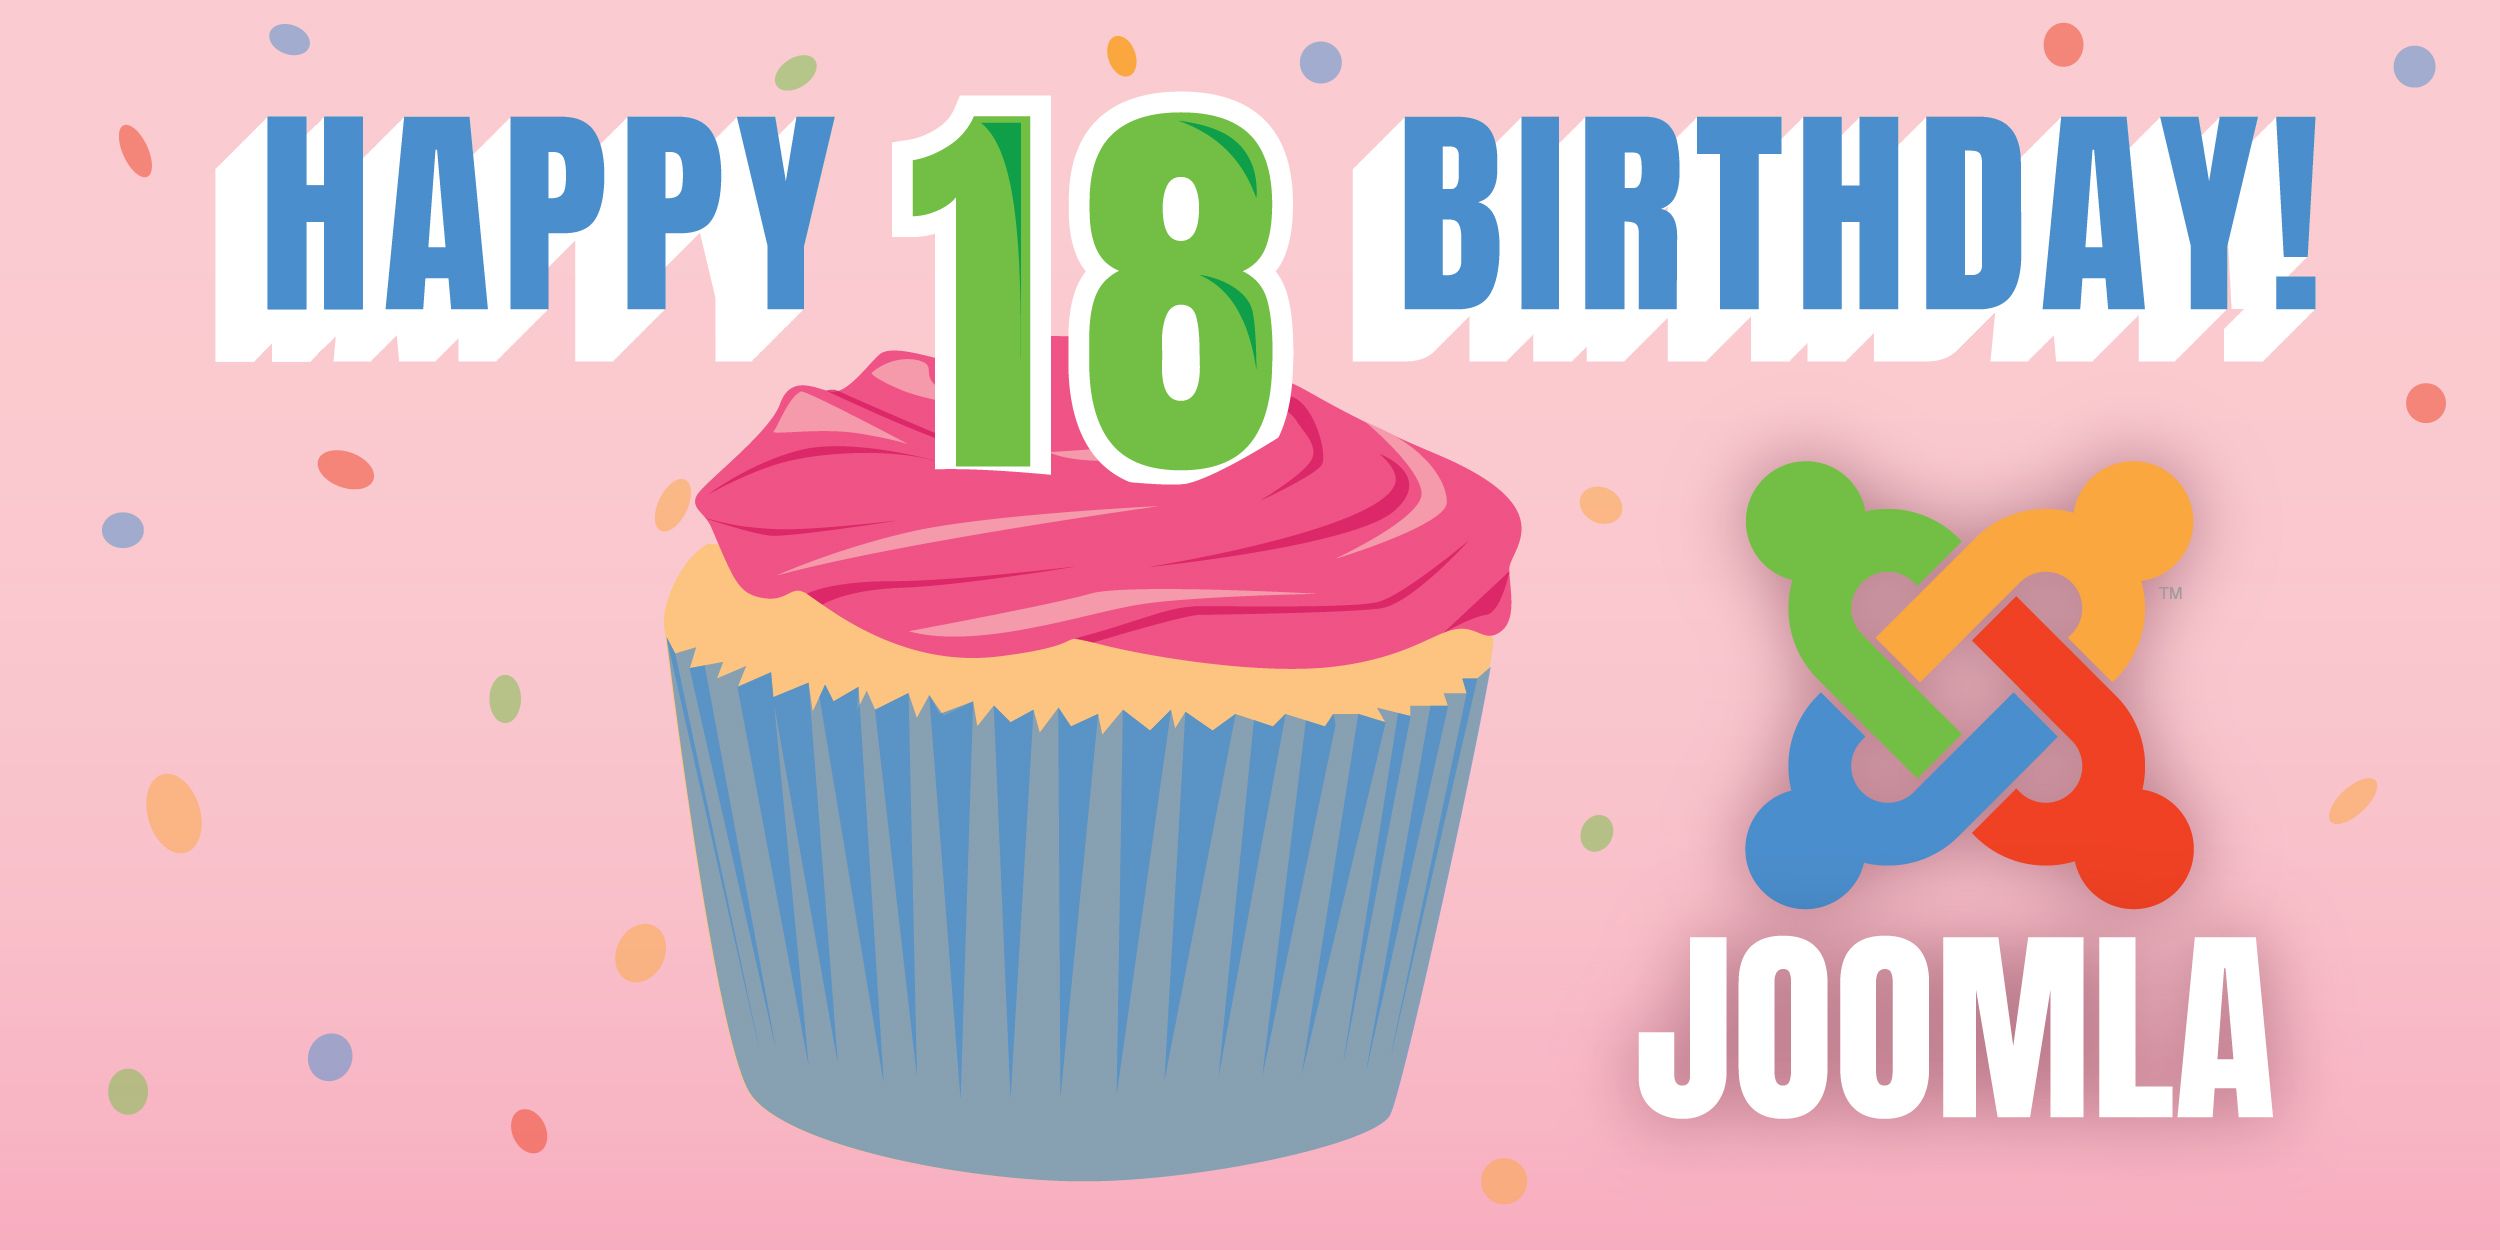 Happy 18th birthday to Joomla from stimulus advertising Virginia web design firm